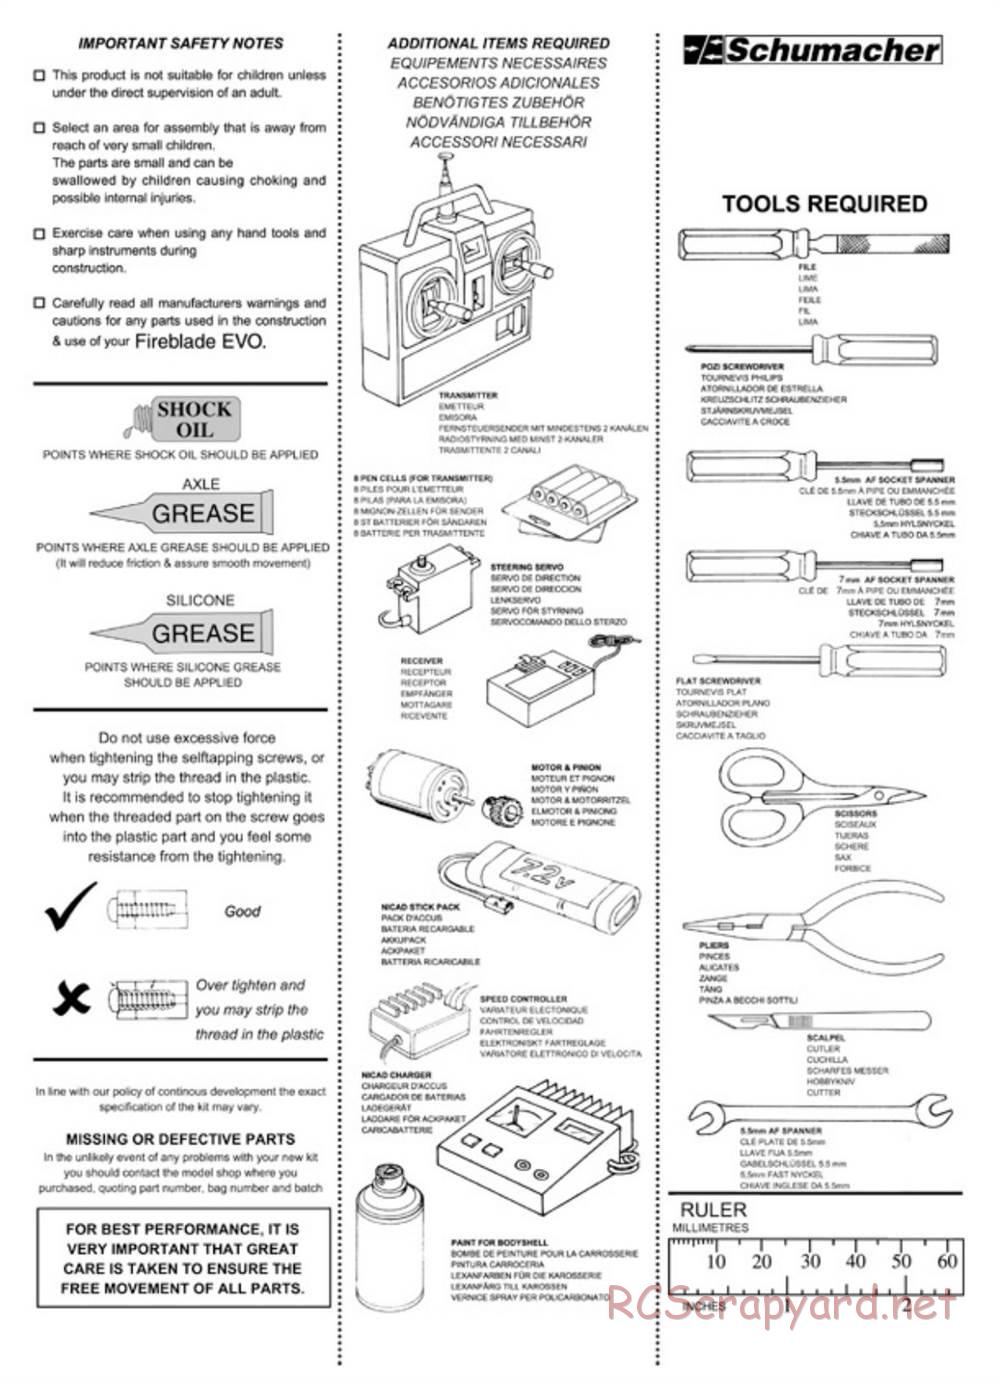 Schumacher - Fireblade Evo - Manual - Page 2